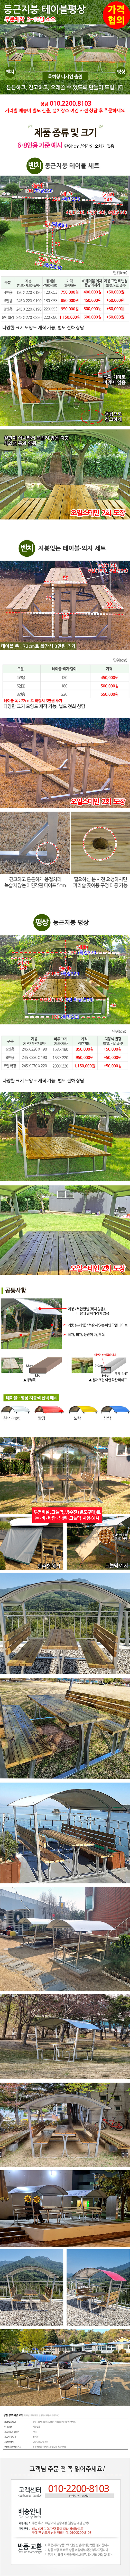 table_pyeong.jpg